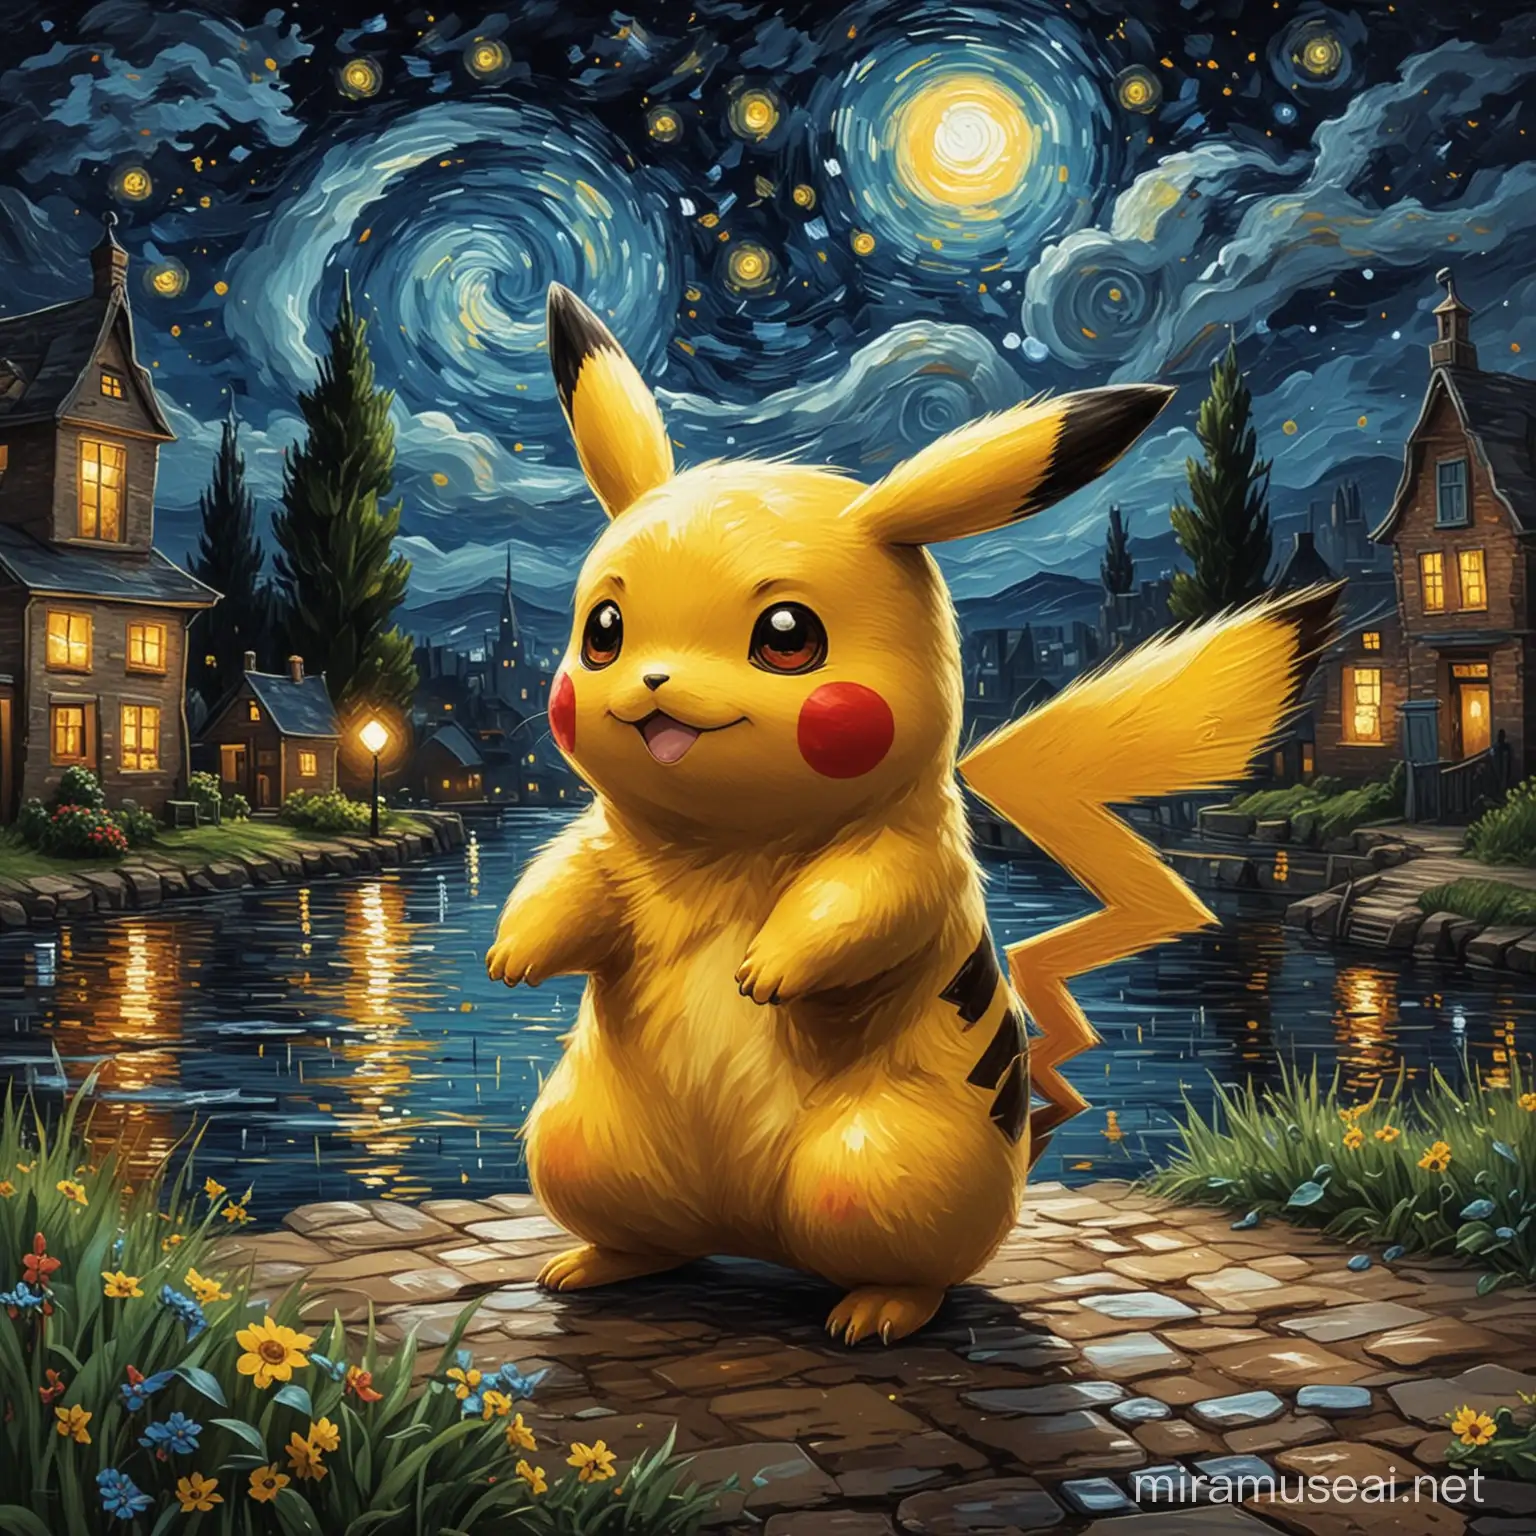 Pokemon painted pikachu in night scene Van Gogh style